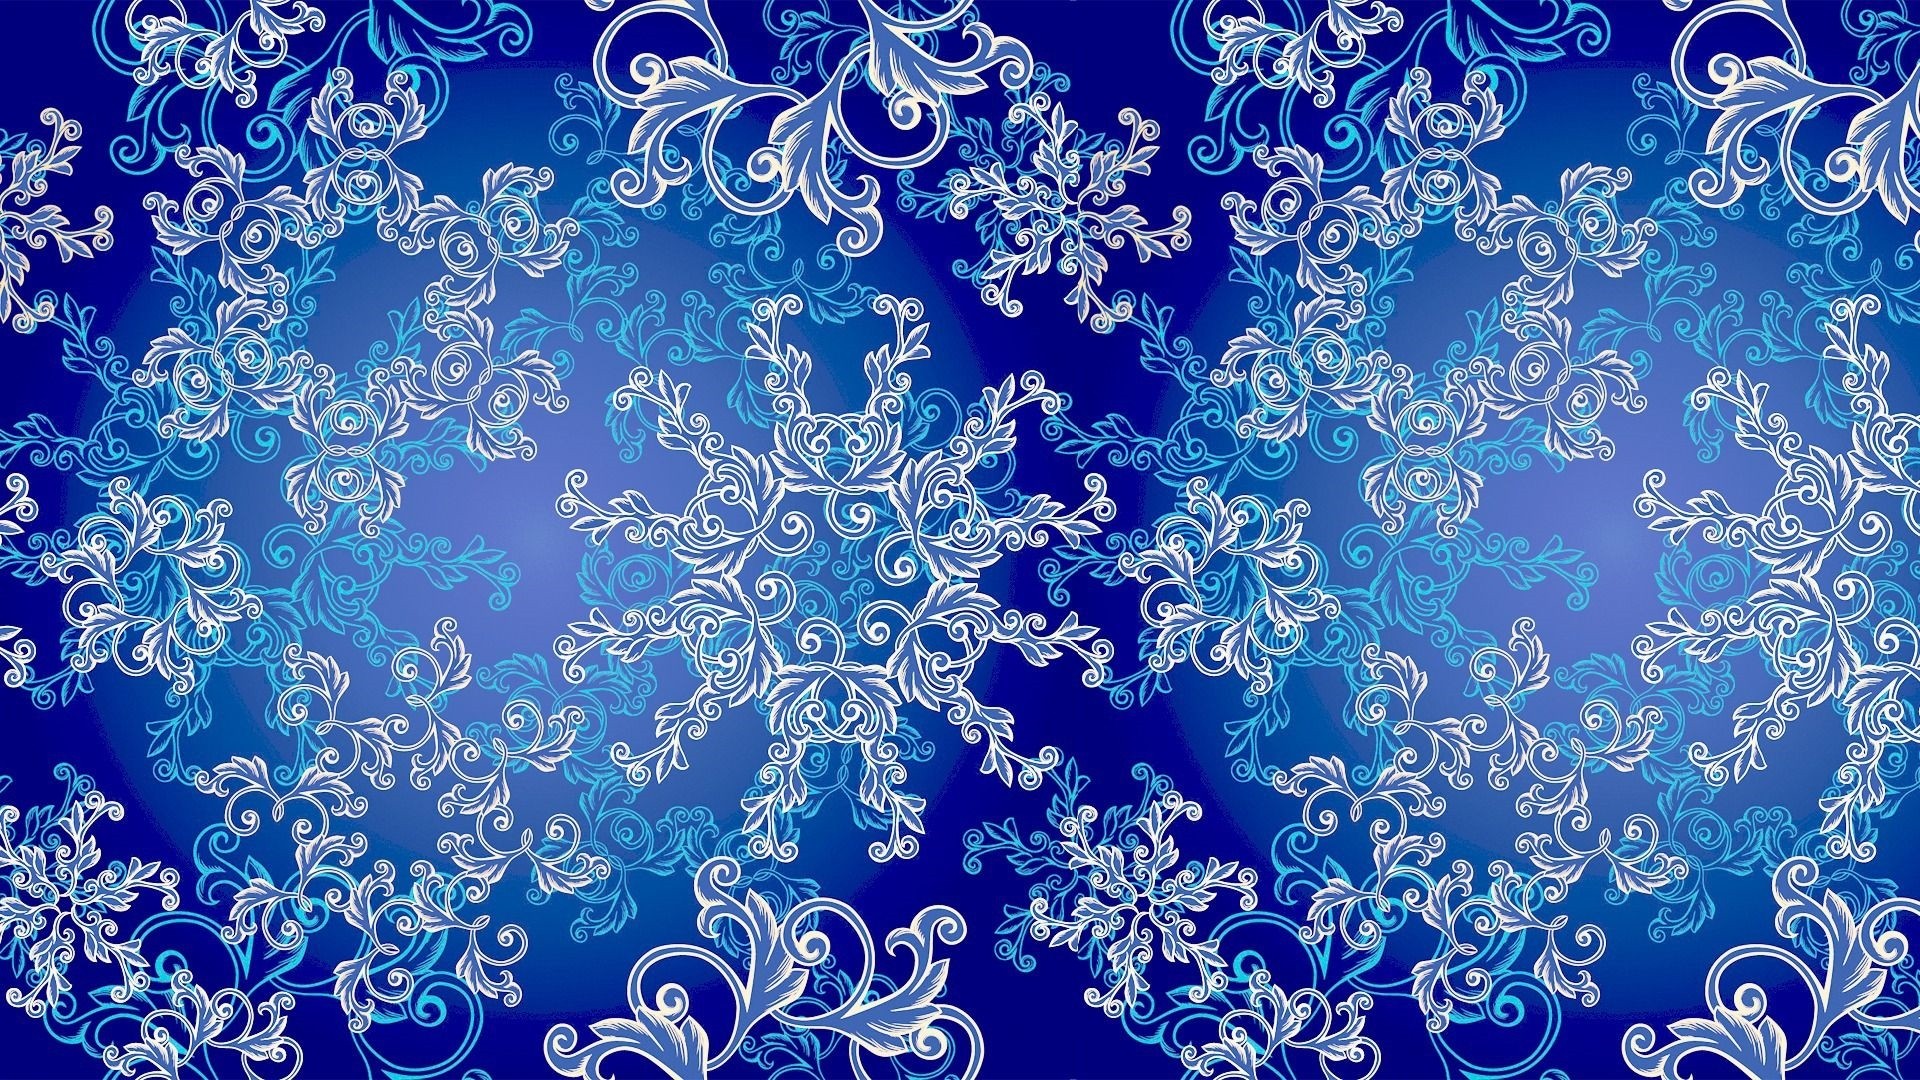 Snowflake Wallpaper Free Download